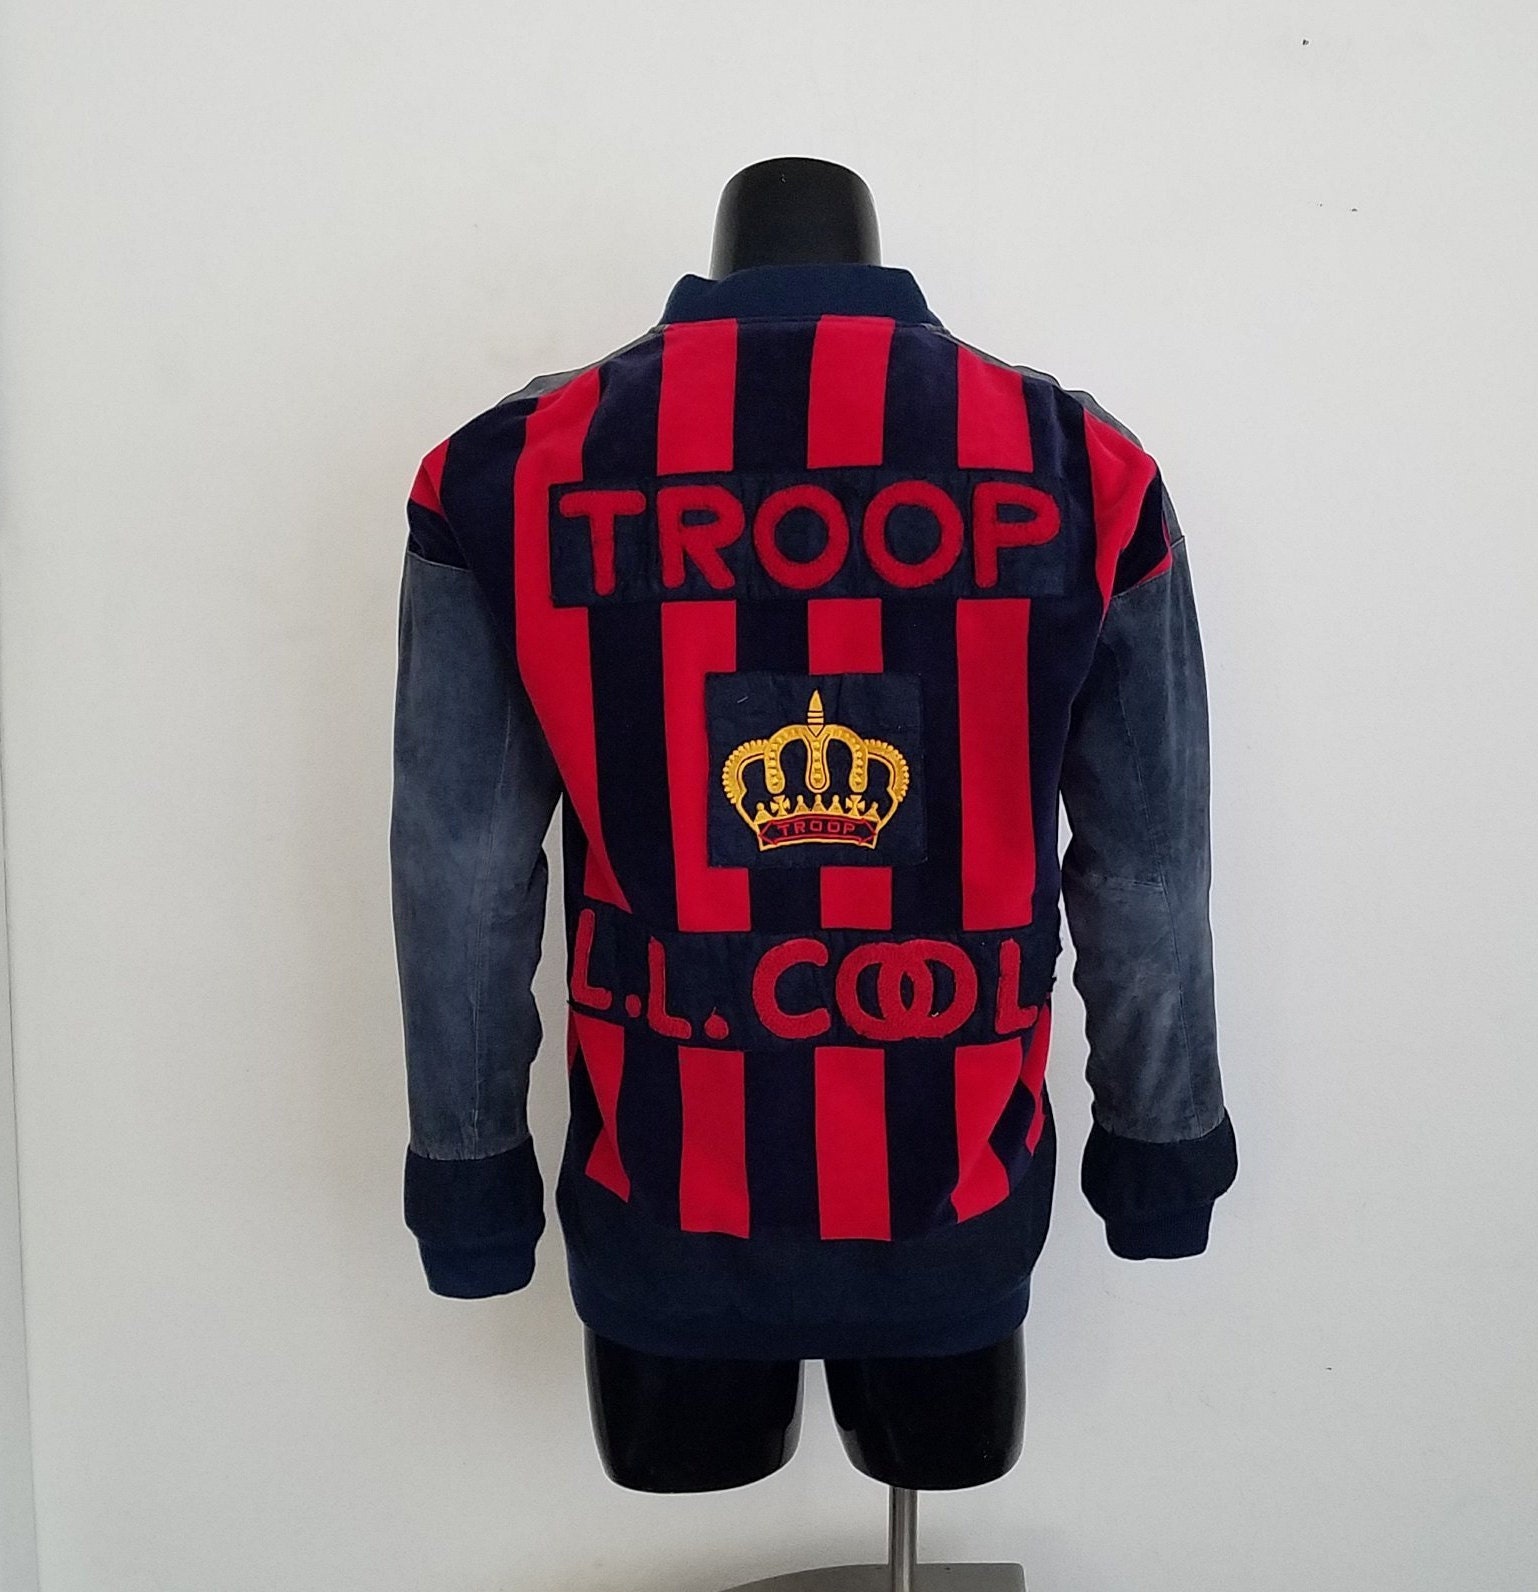 Extremely Rare LL COOL J Troop Jacket Sz. M | Etsy Denmark